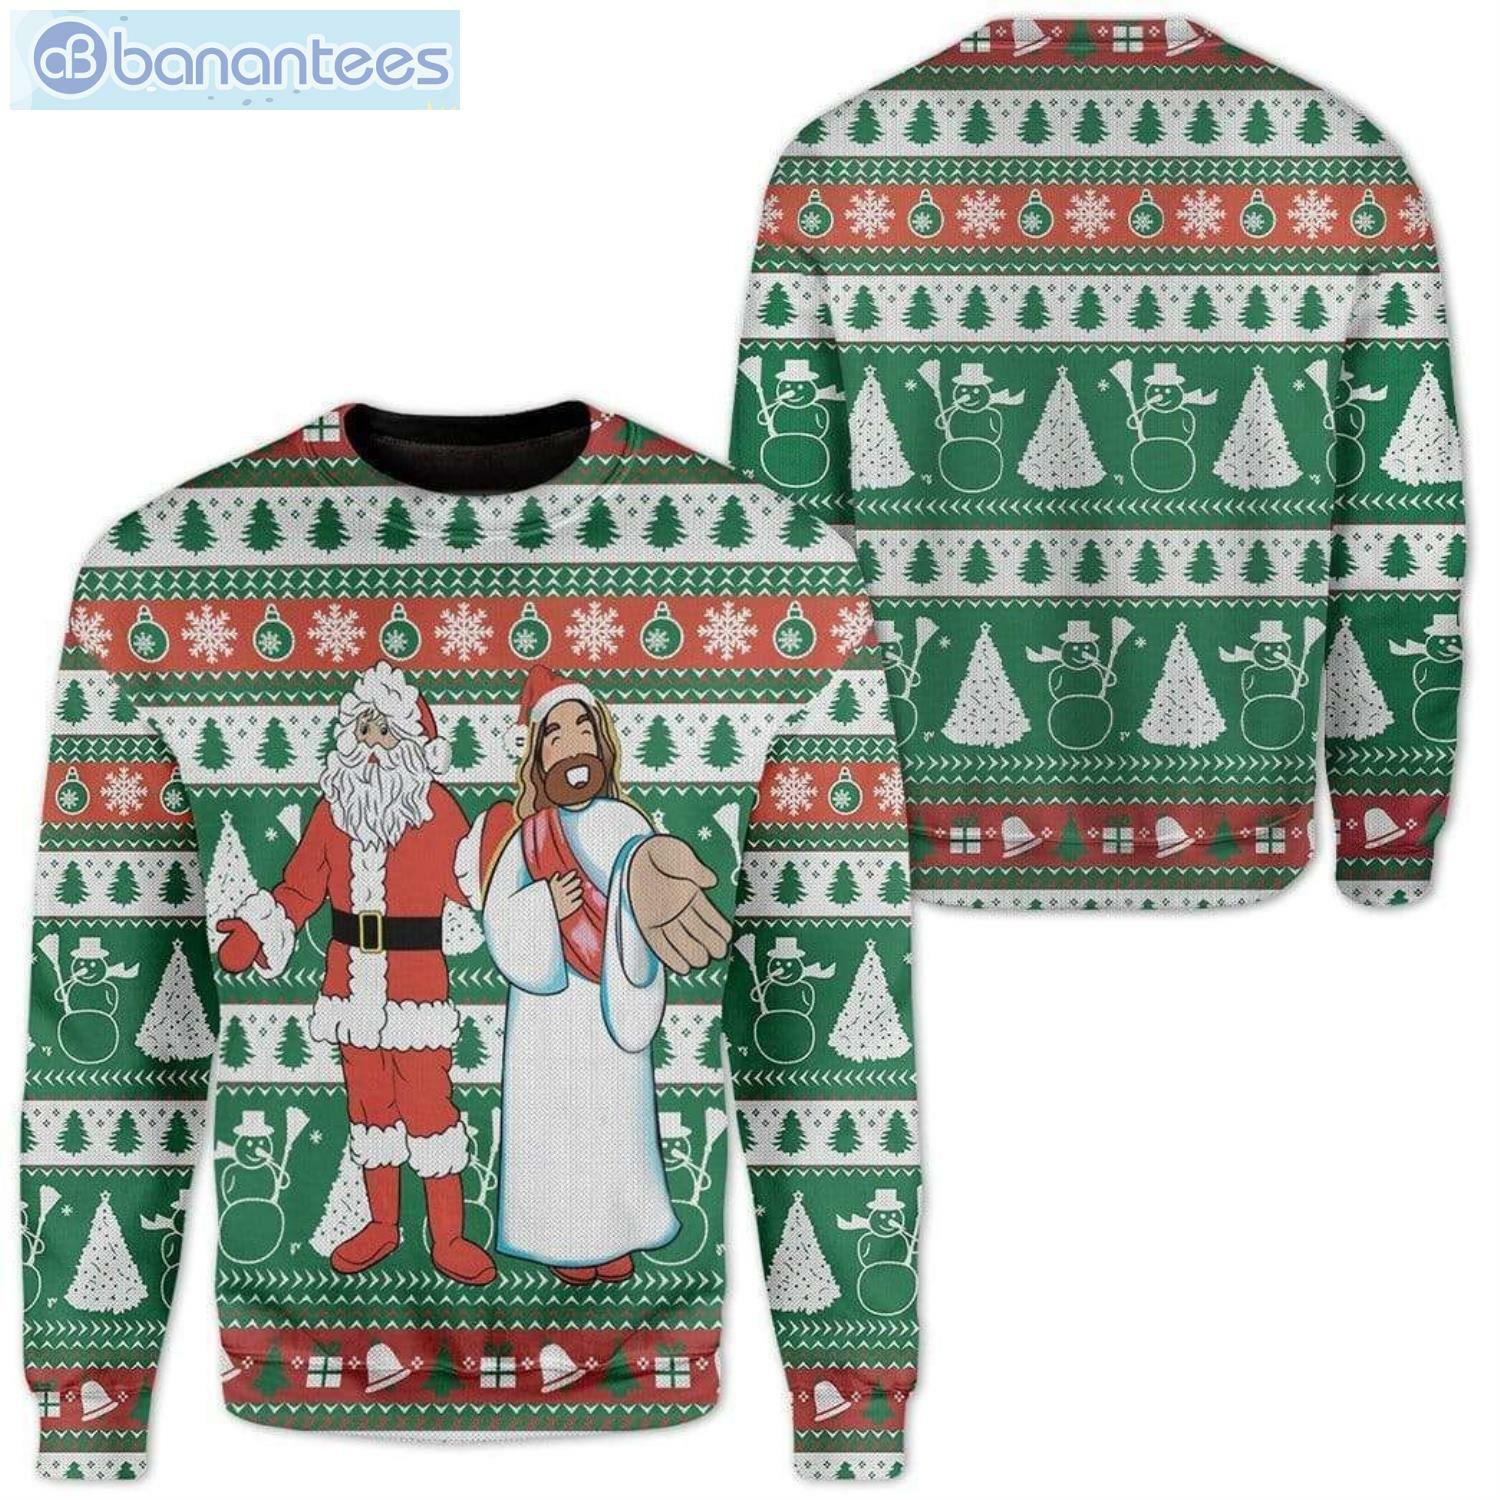 Santa And Jesus Ugly Christmas Sweater Product Photo 1 Product photo 1